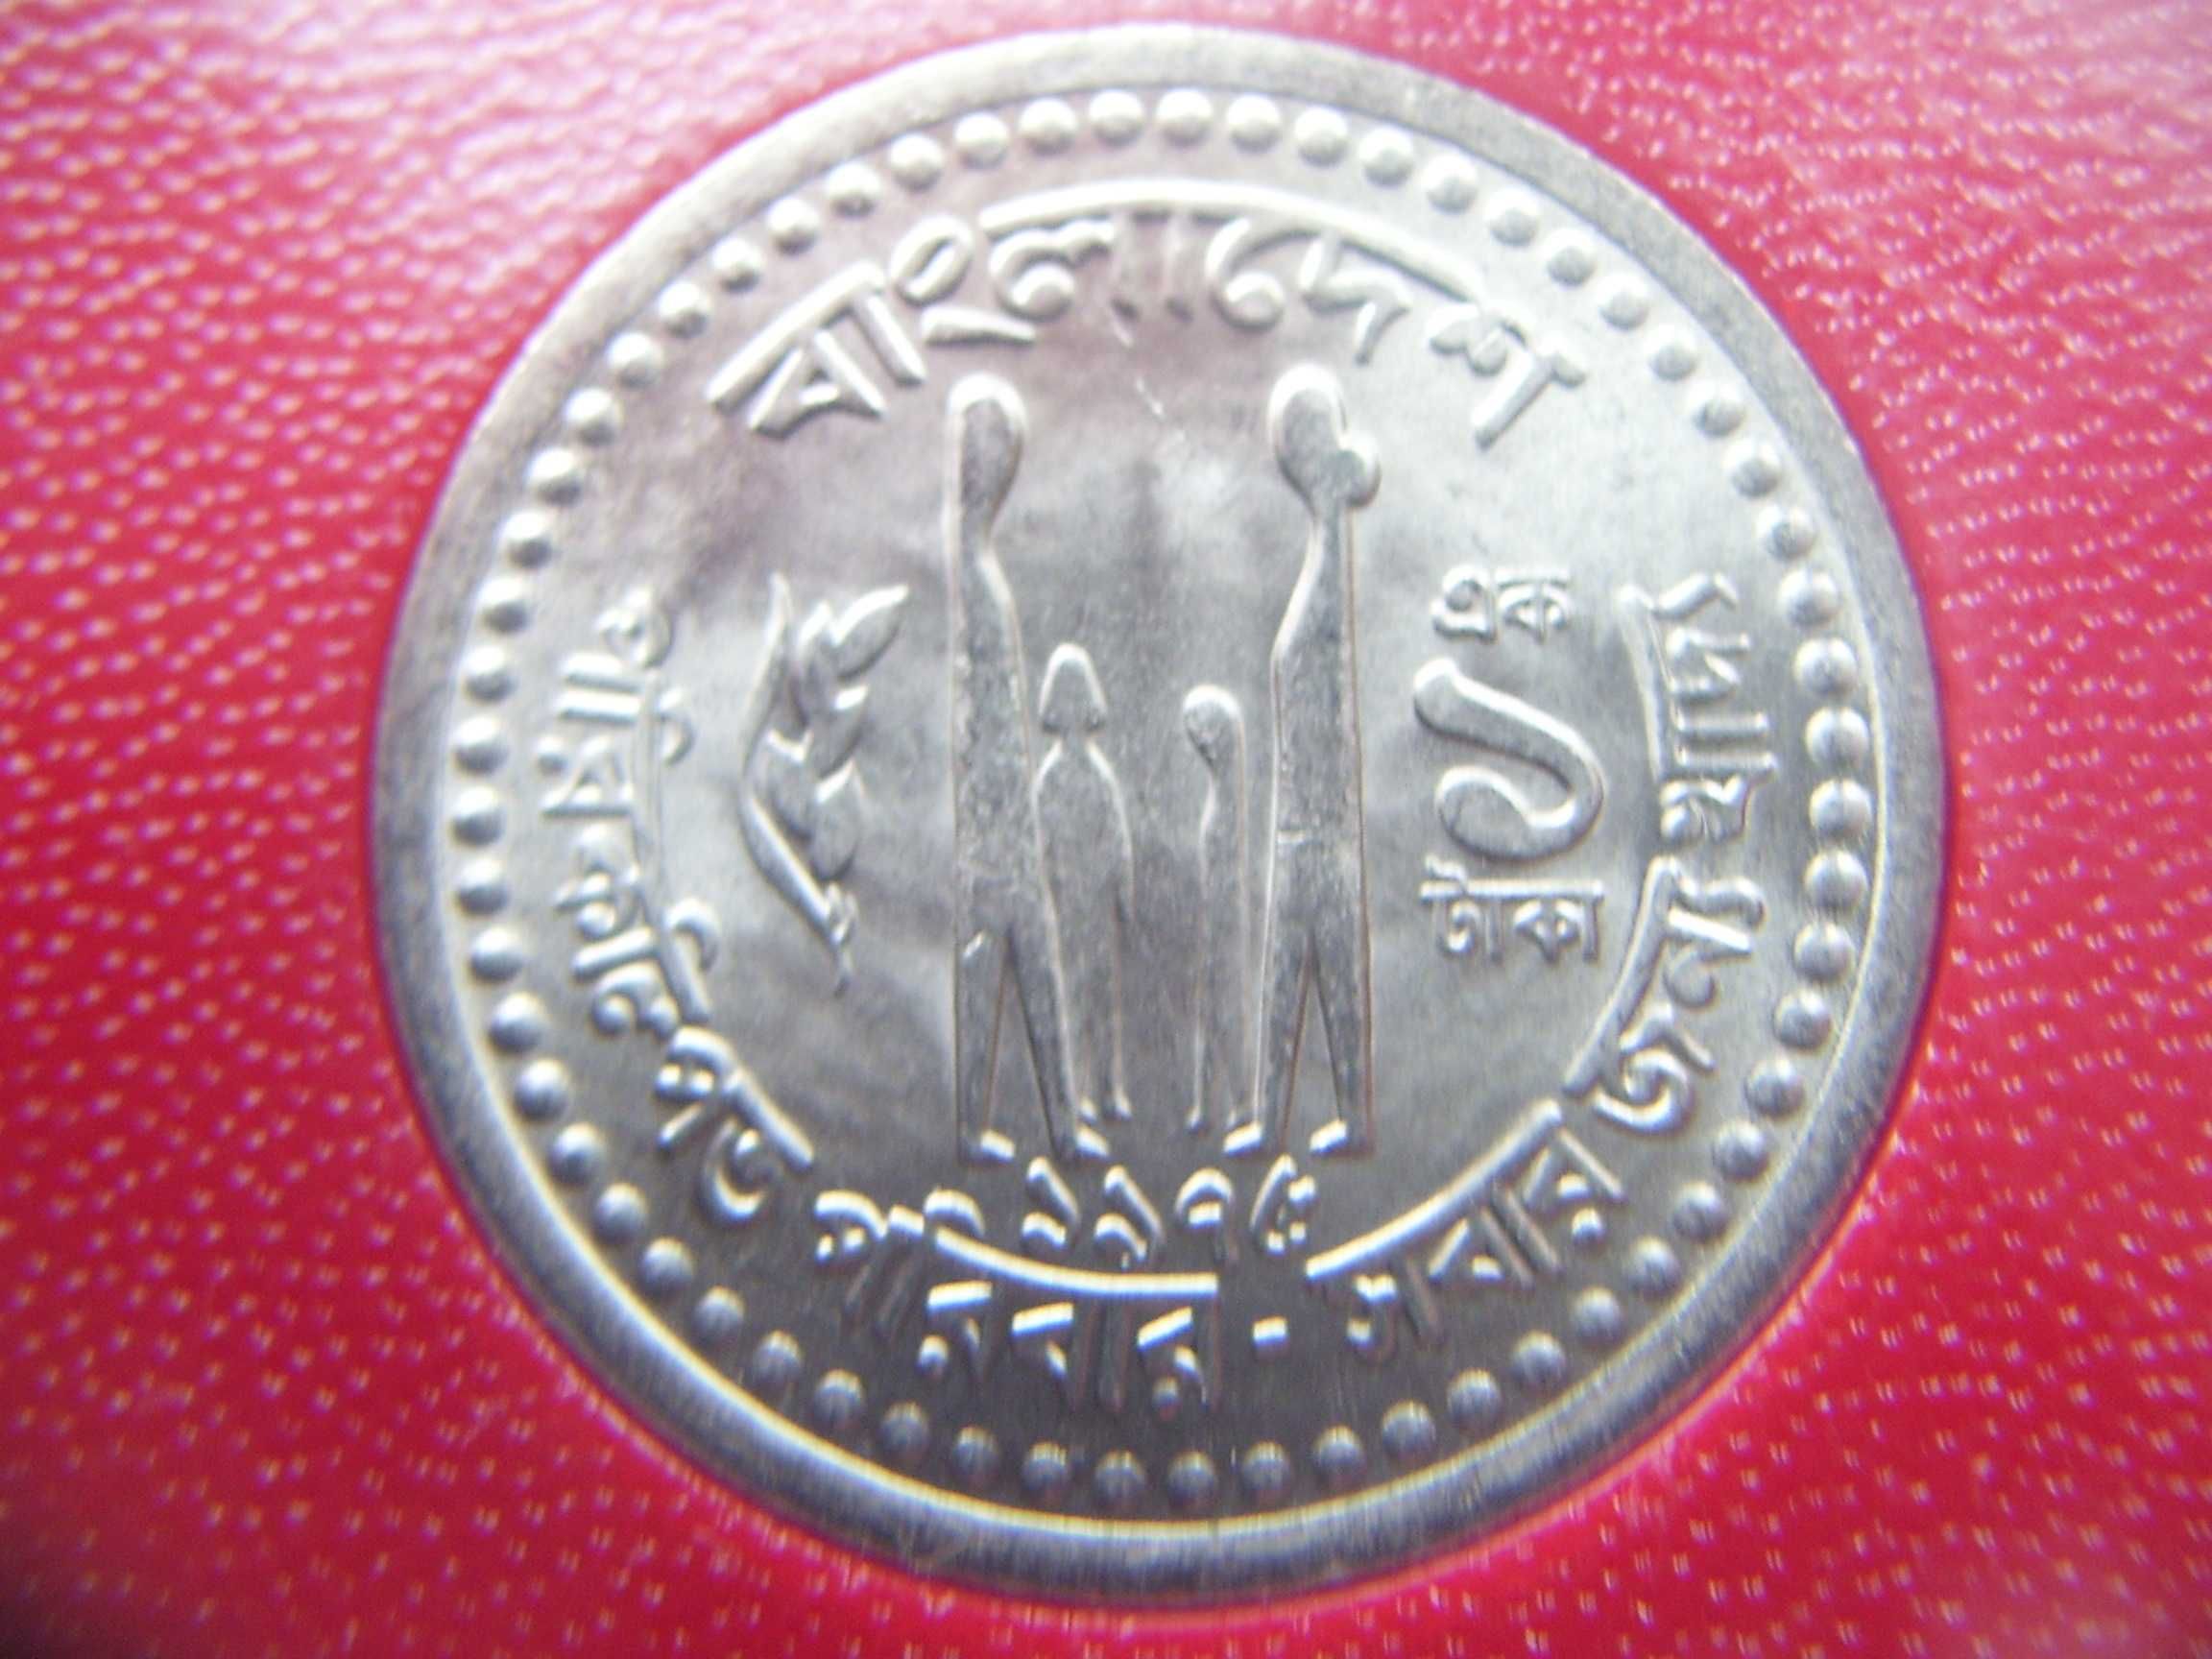 Stare monety Bangladesz FAO 3 monety 1974 i 1975 stan menniczy